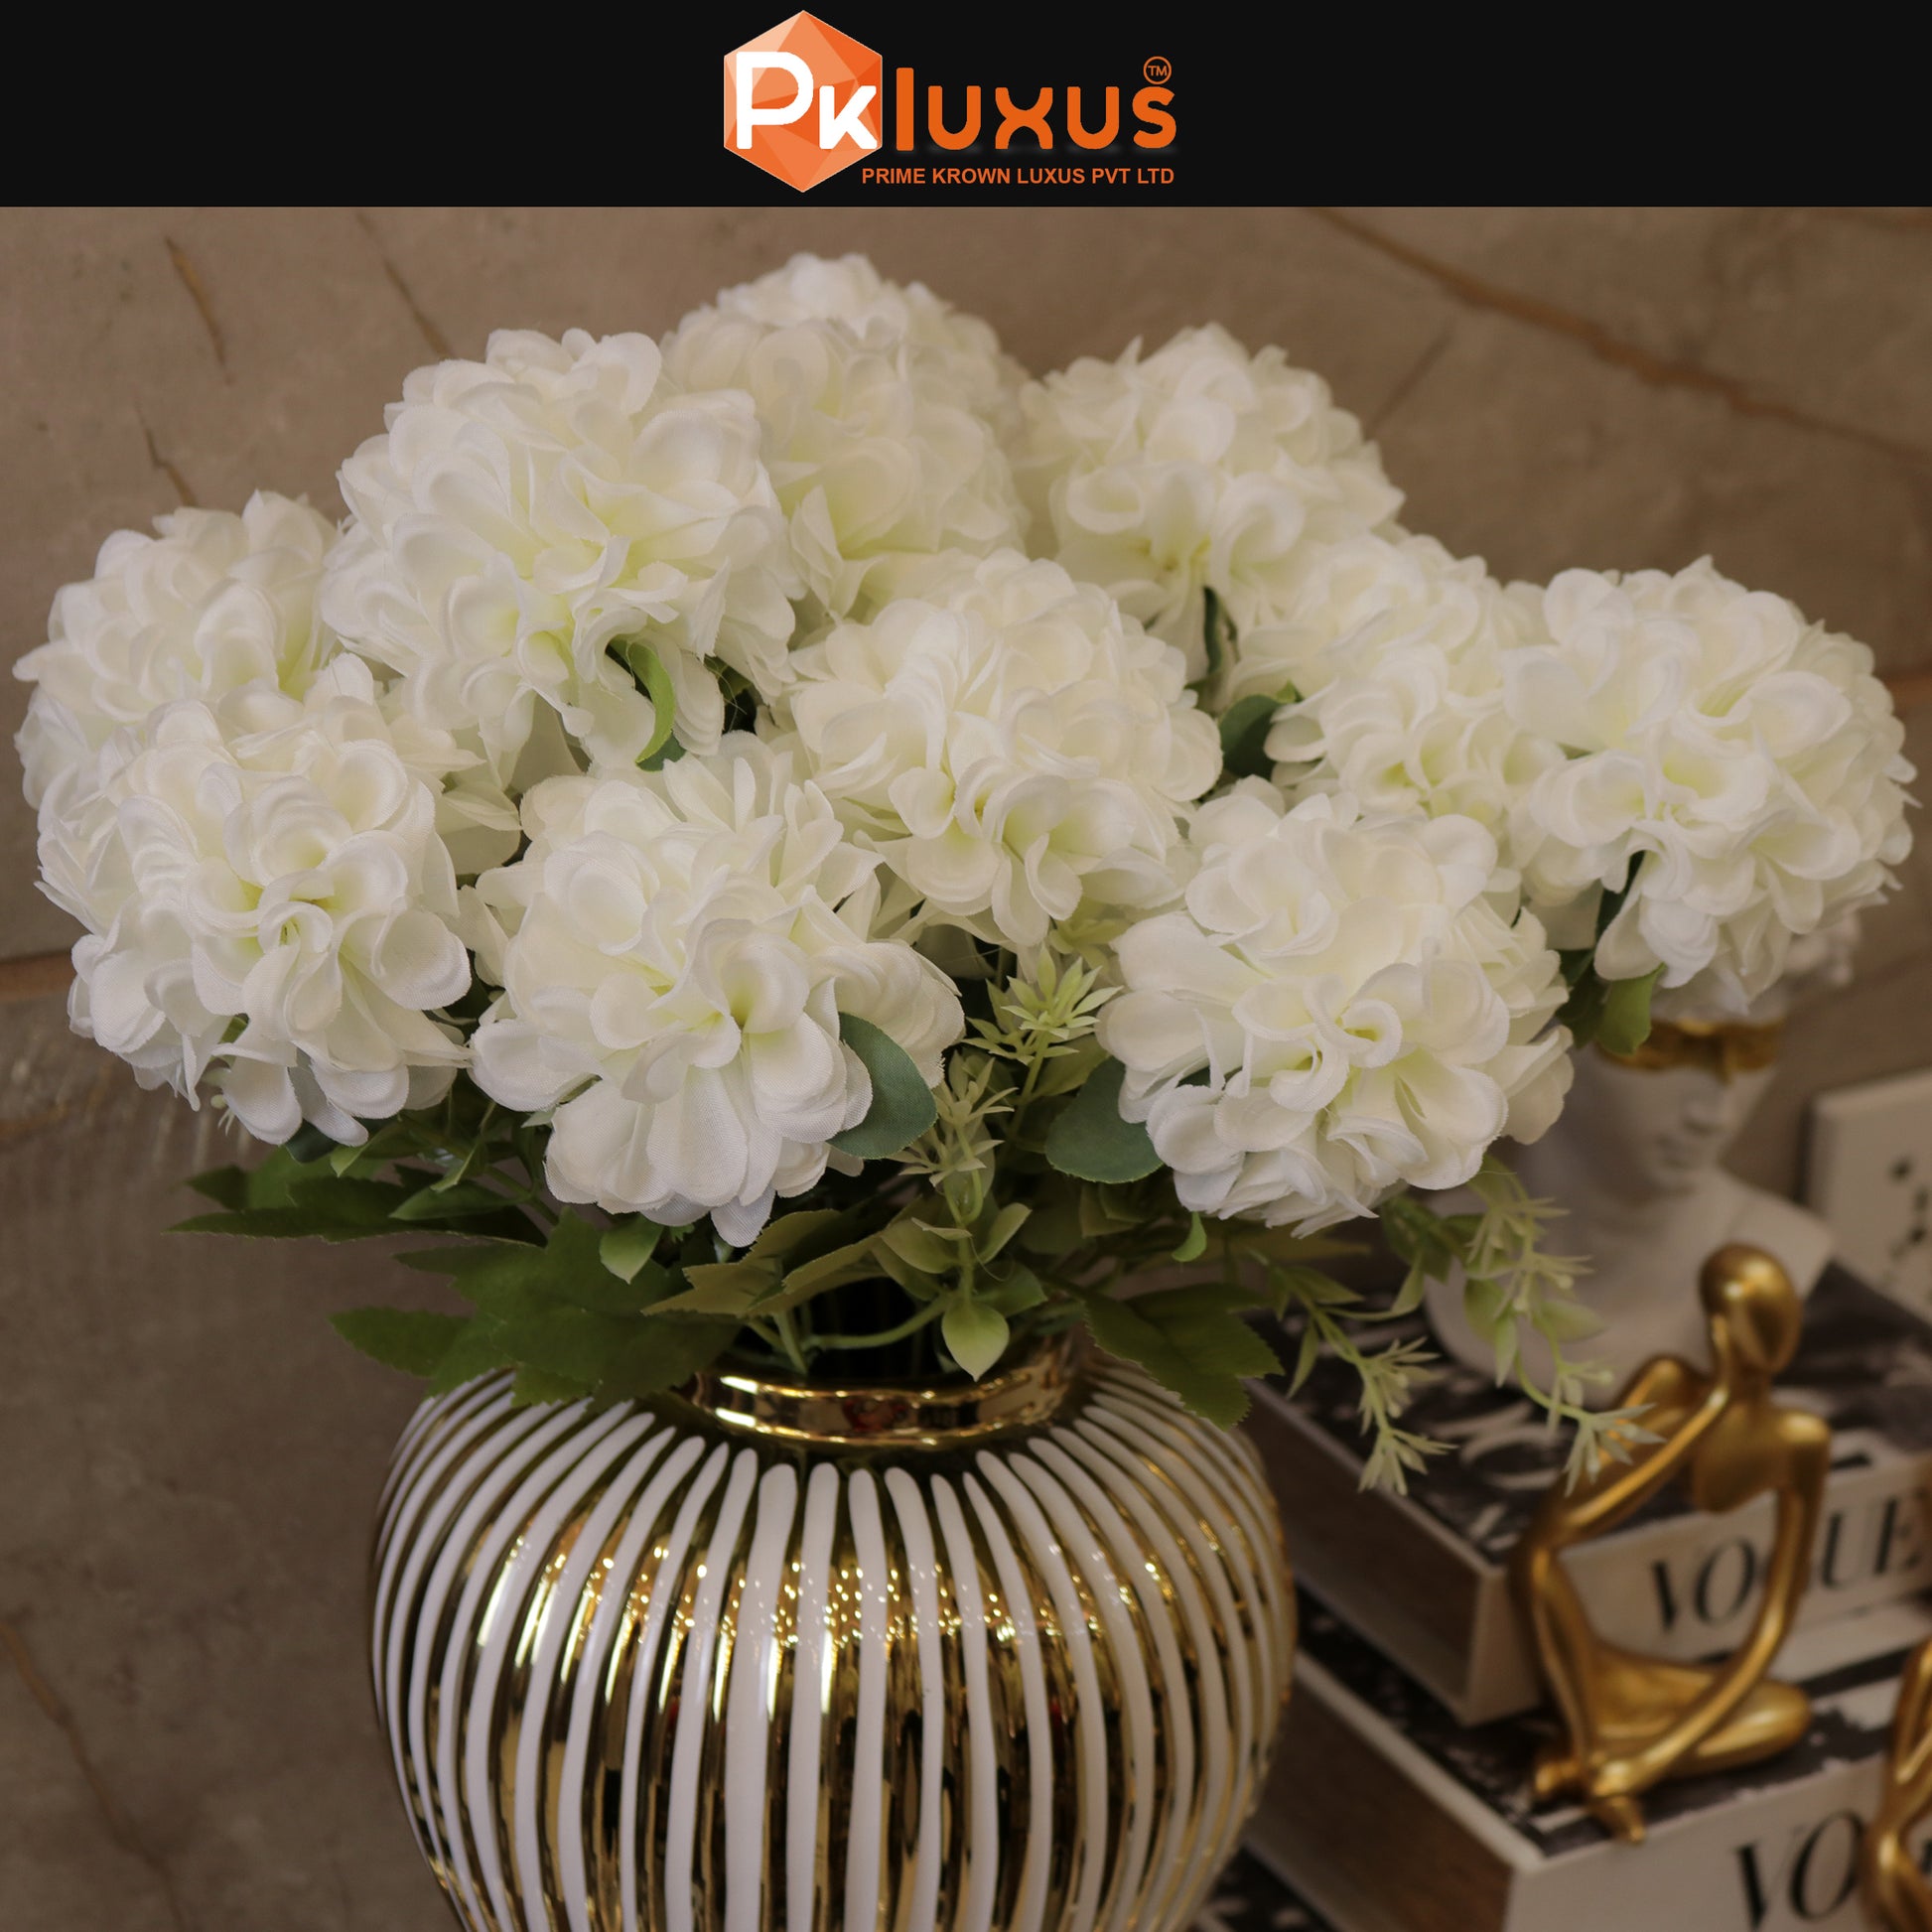 24-inch White Hydrangeas Ball Flowers By PK LUXUS™ - PK LUXUS